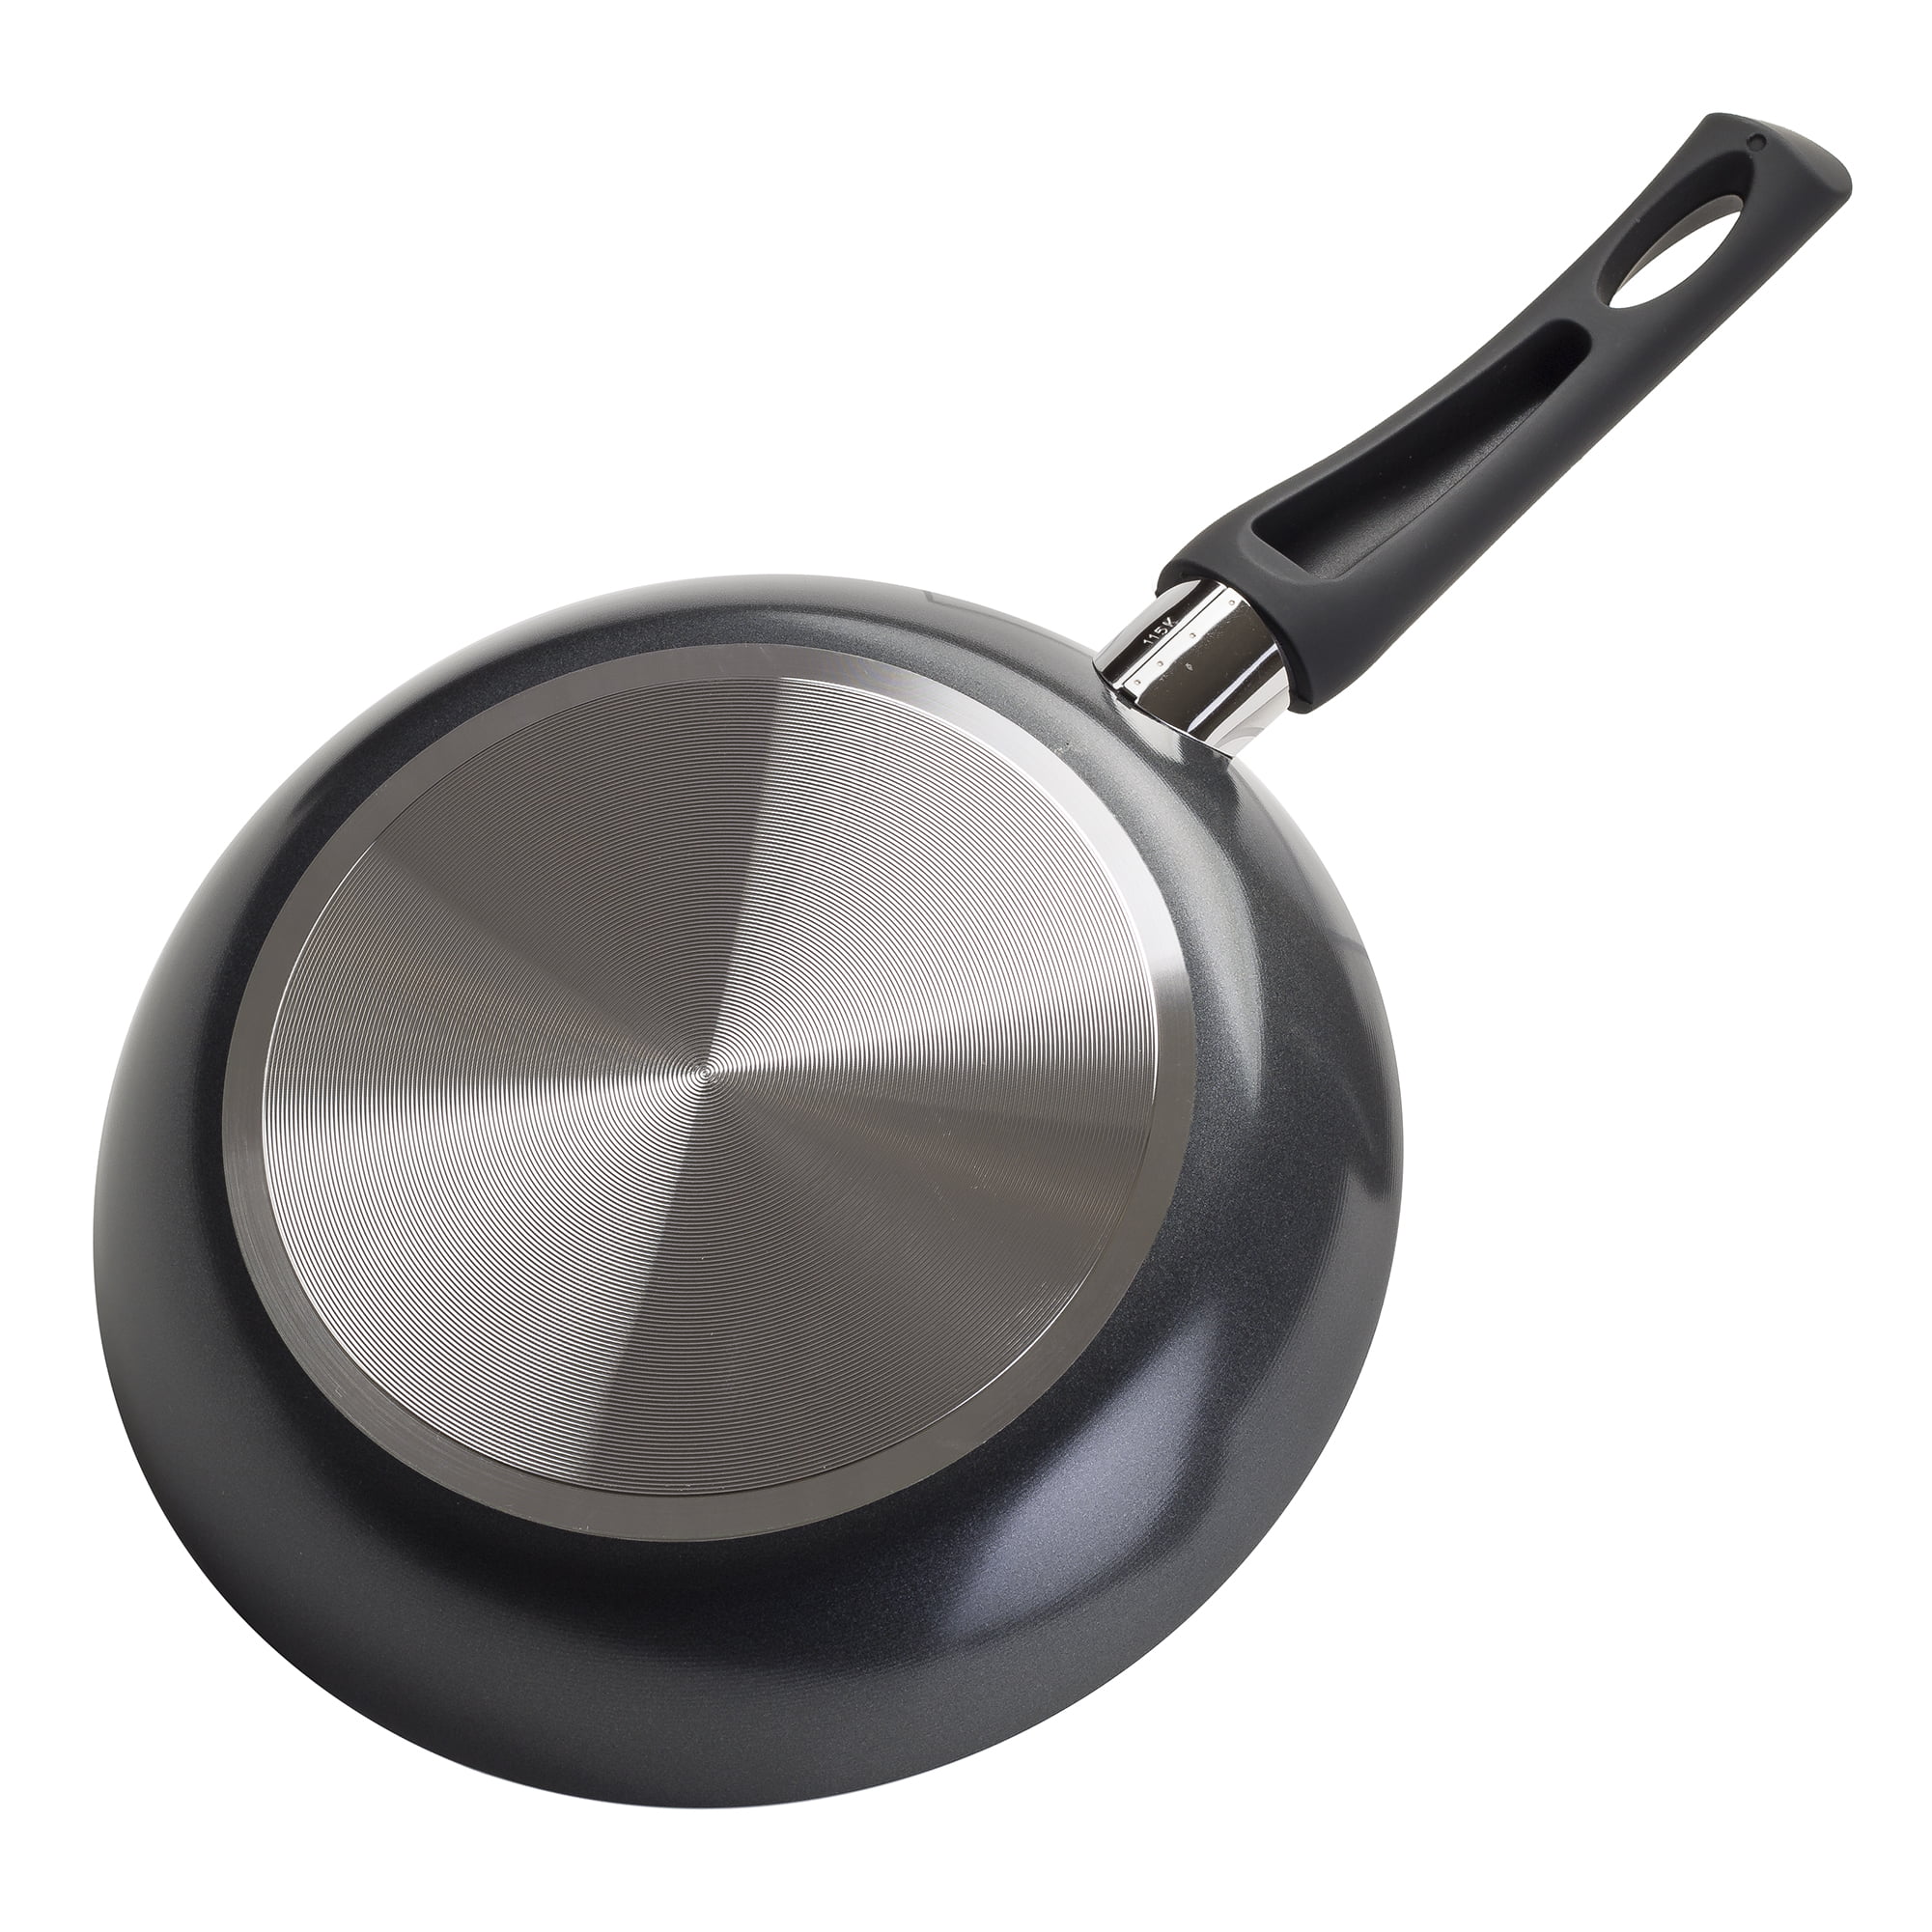 Evolve Non Stick Cookware Set, 8 Piece – Ecolution Cookware